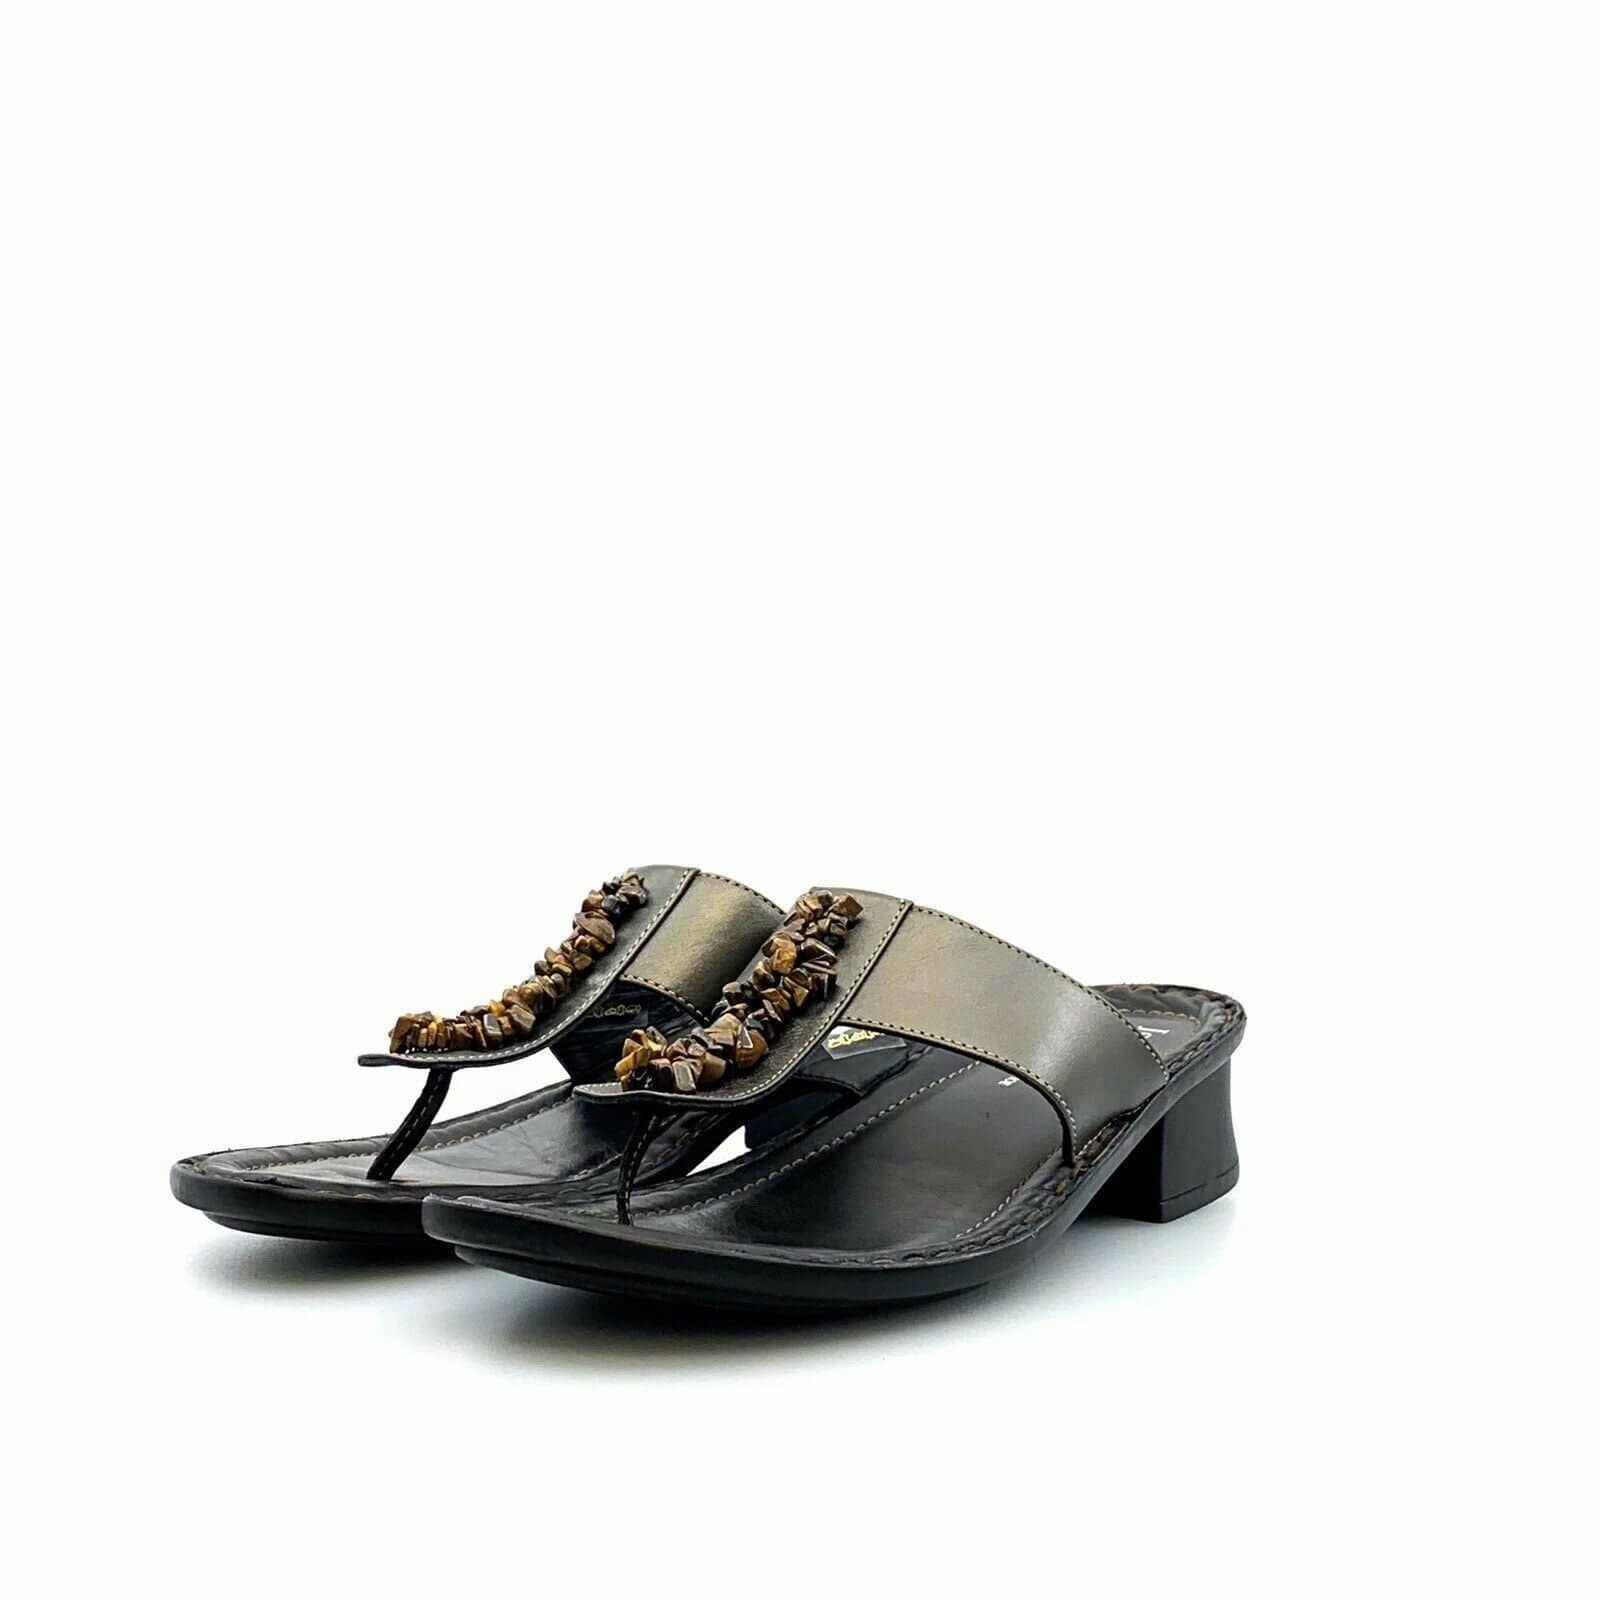 Josef Seibel Womens Thong Sandals Shoes, Titanium Gray - Size 9M - parsimonyshoppes